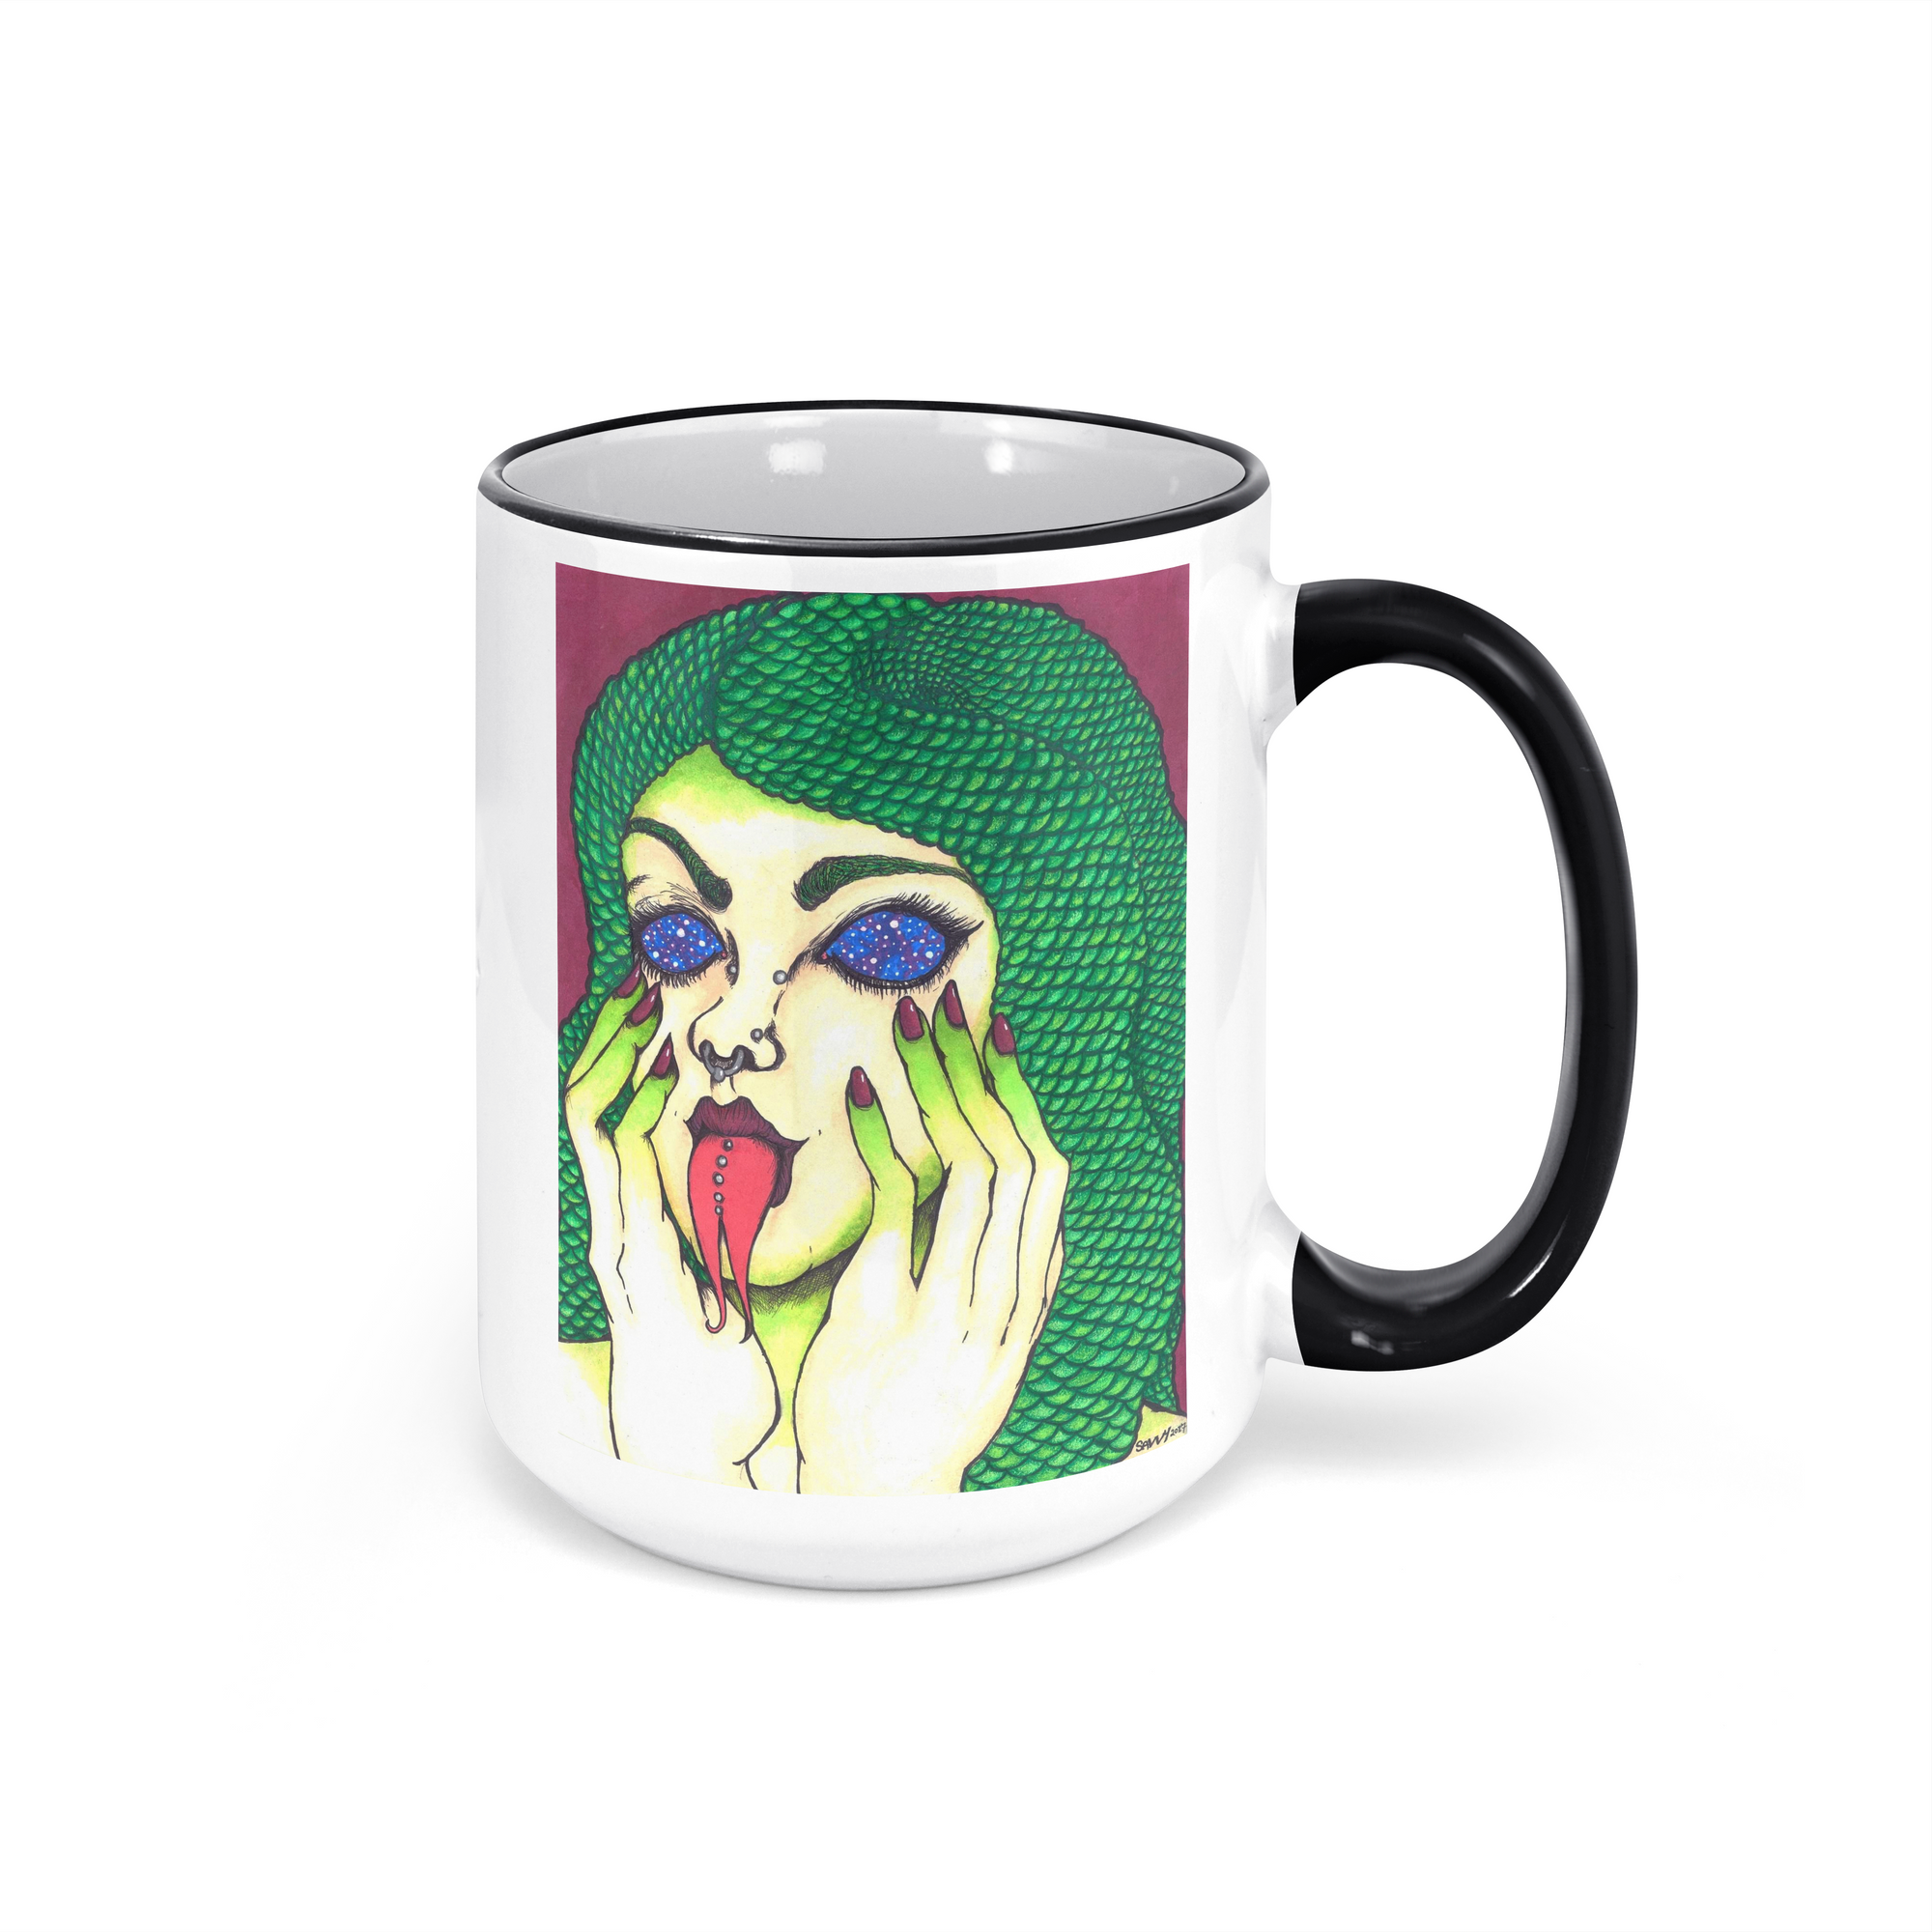 "Don't Look" - 15oz Coffee Mug